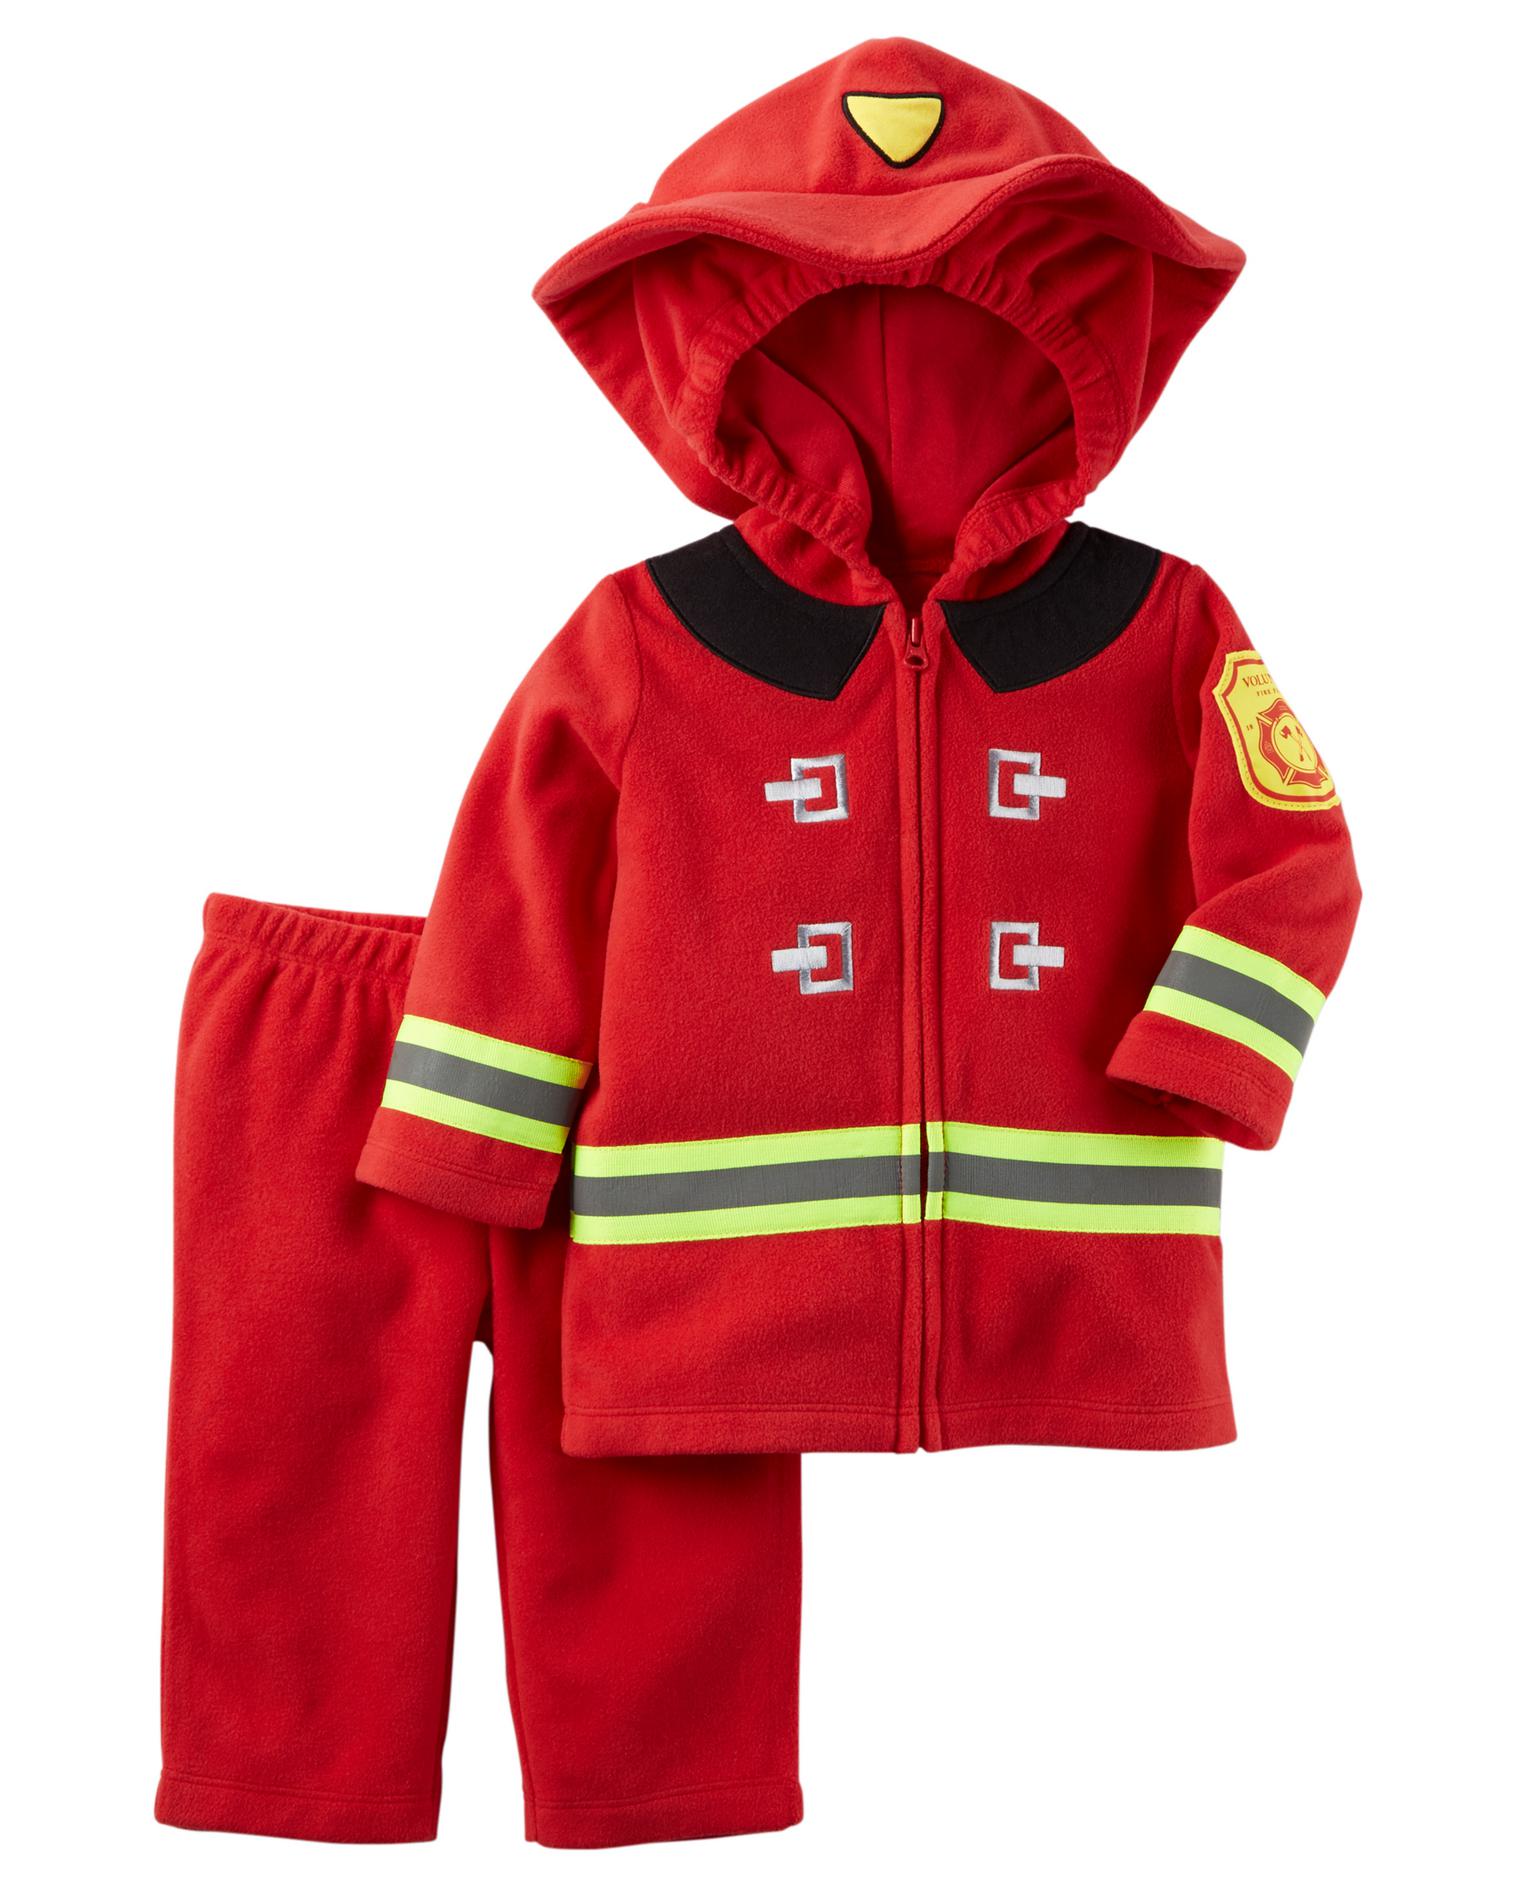 Carter's Newborn & Infant Boys' Halloween Costume - Firefighter